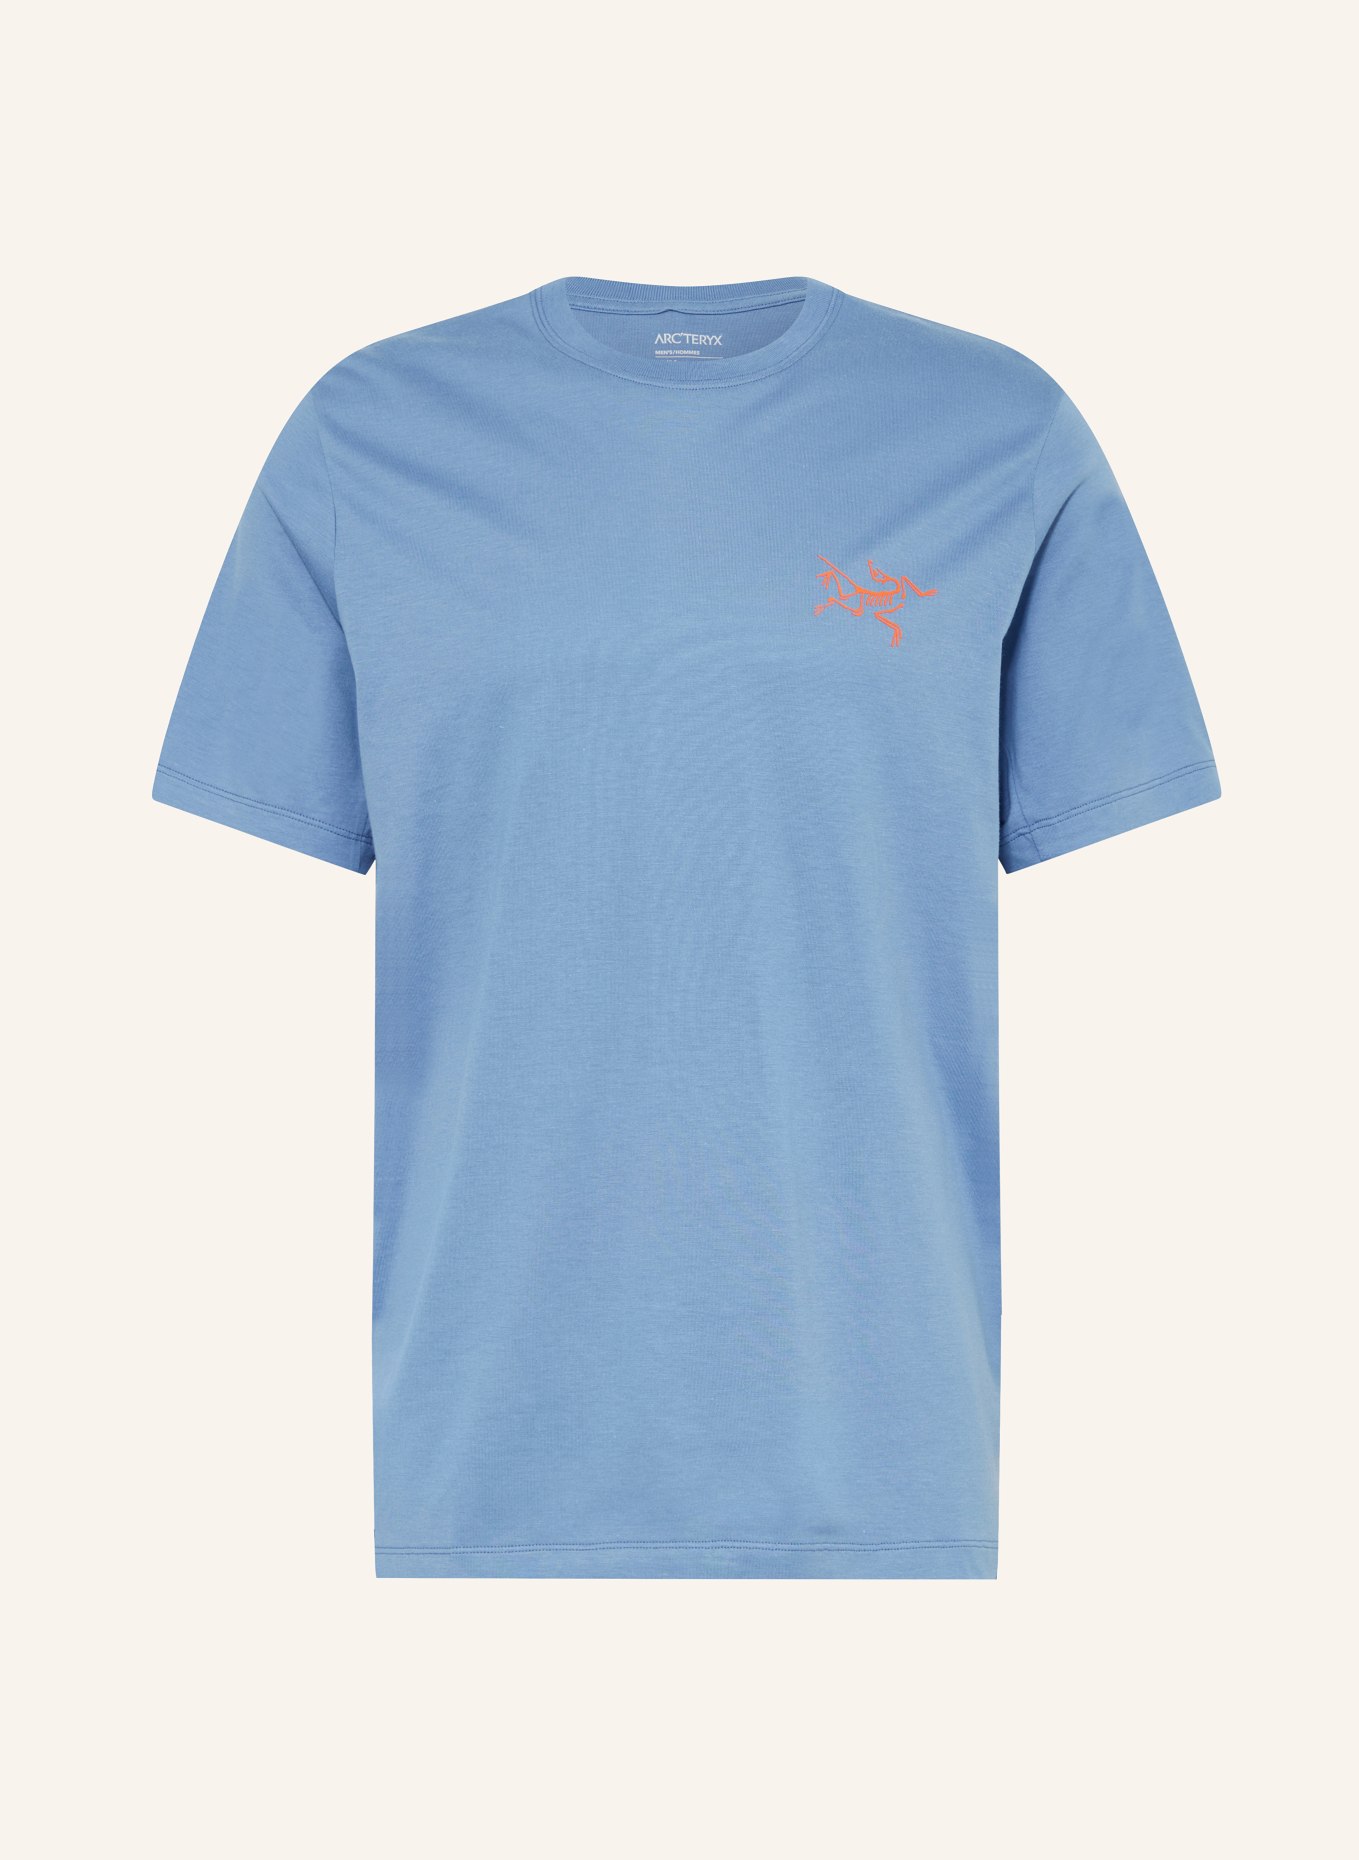 ARC'TERYX T-Shirt ARC'MULTI, Farbe: BLAU (Bild 1)